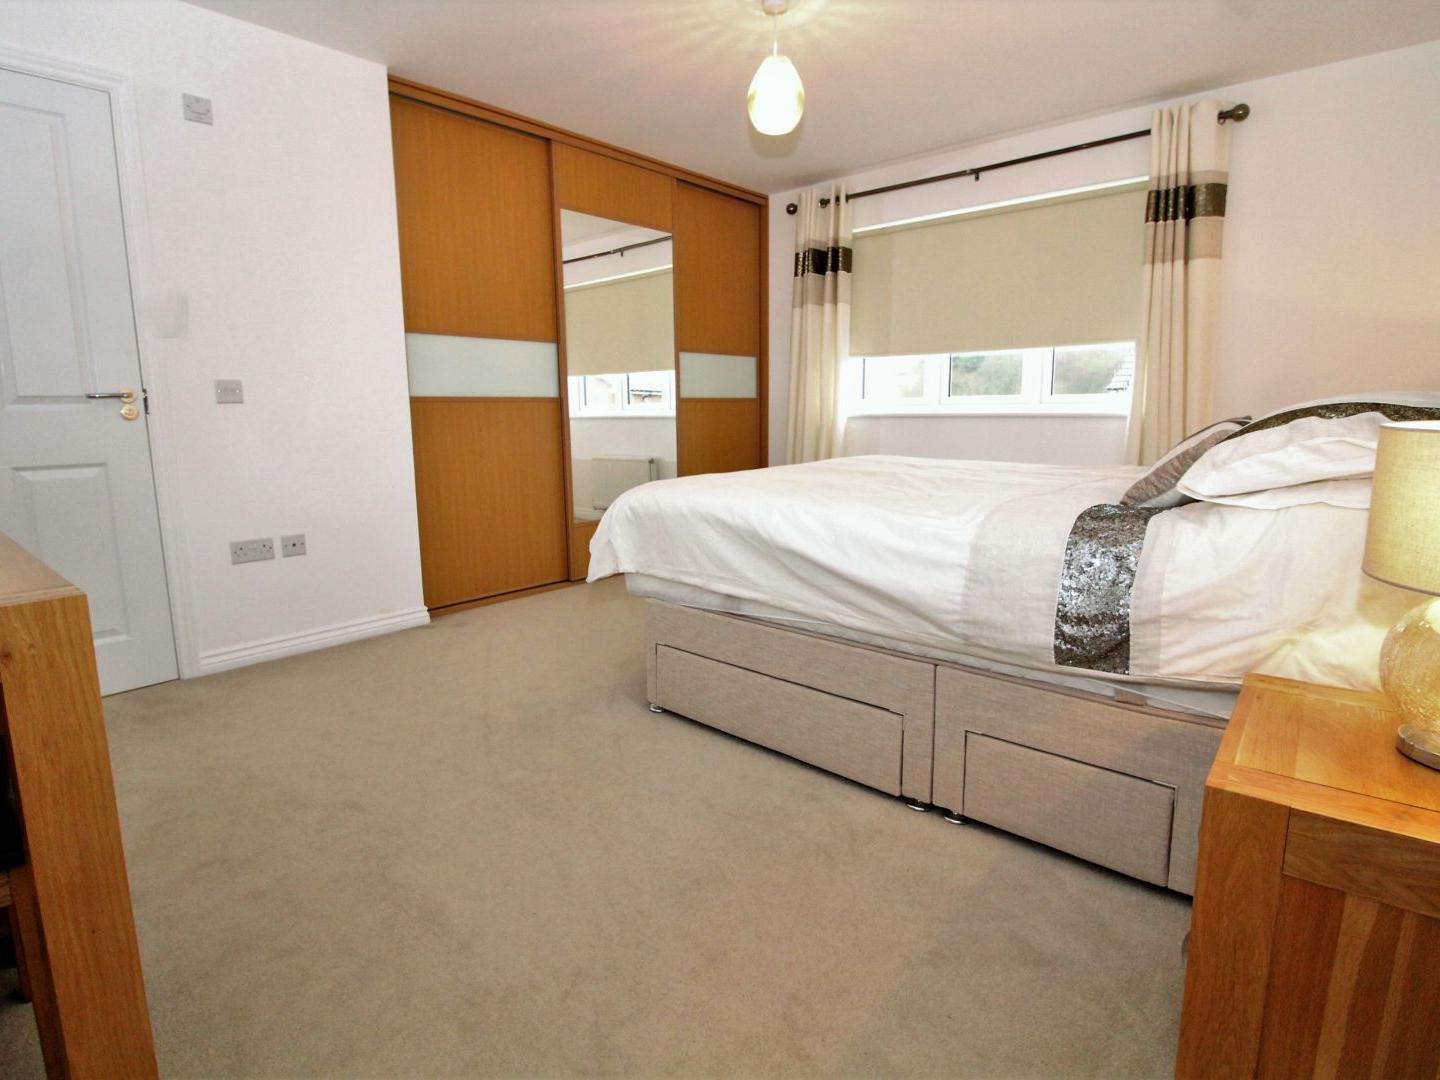 Thomson Drive, Redding - Master bedroom.